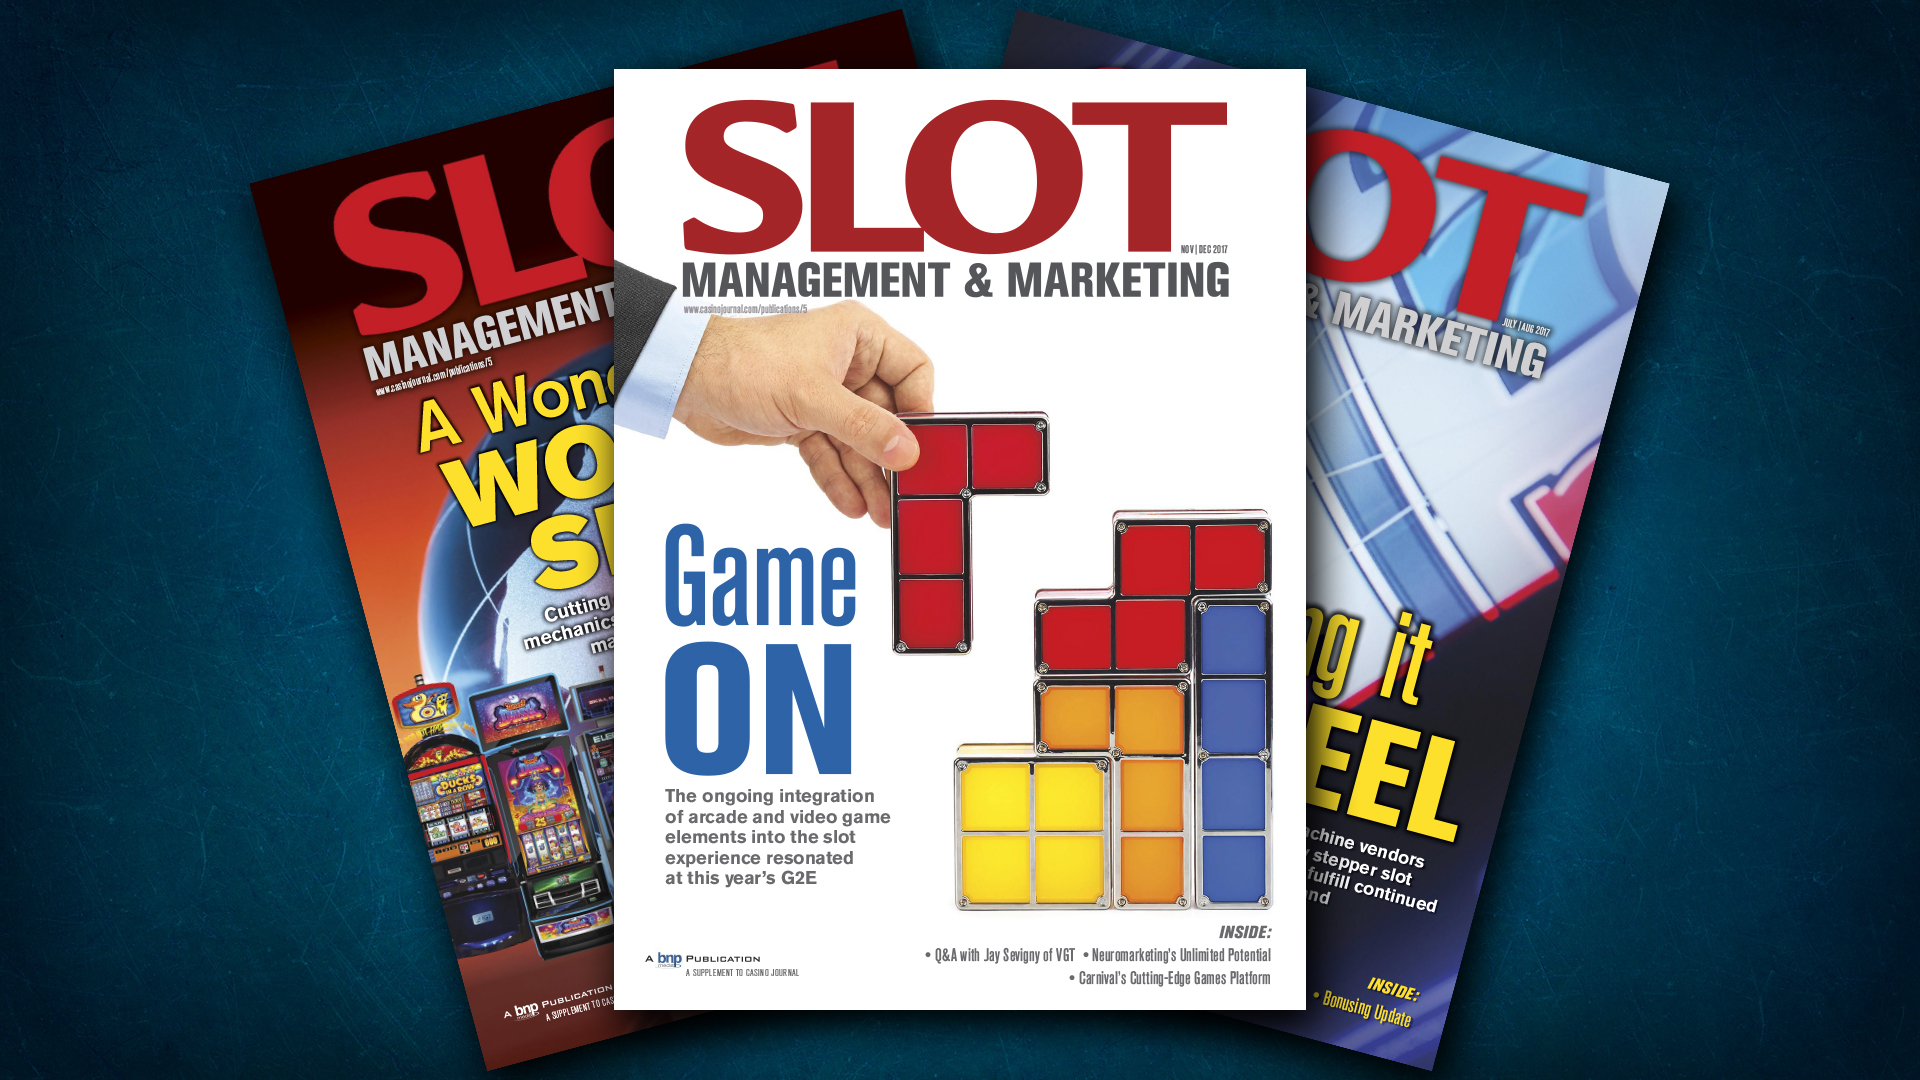 Slot Management & Marketing Dec 2017